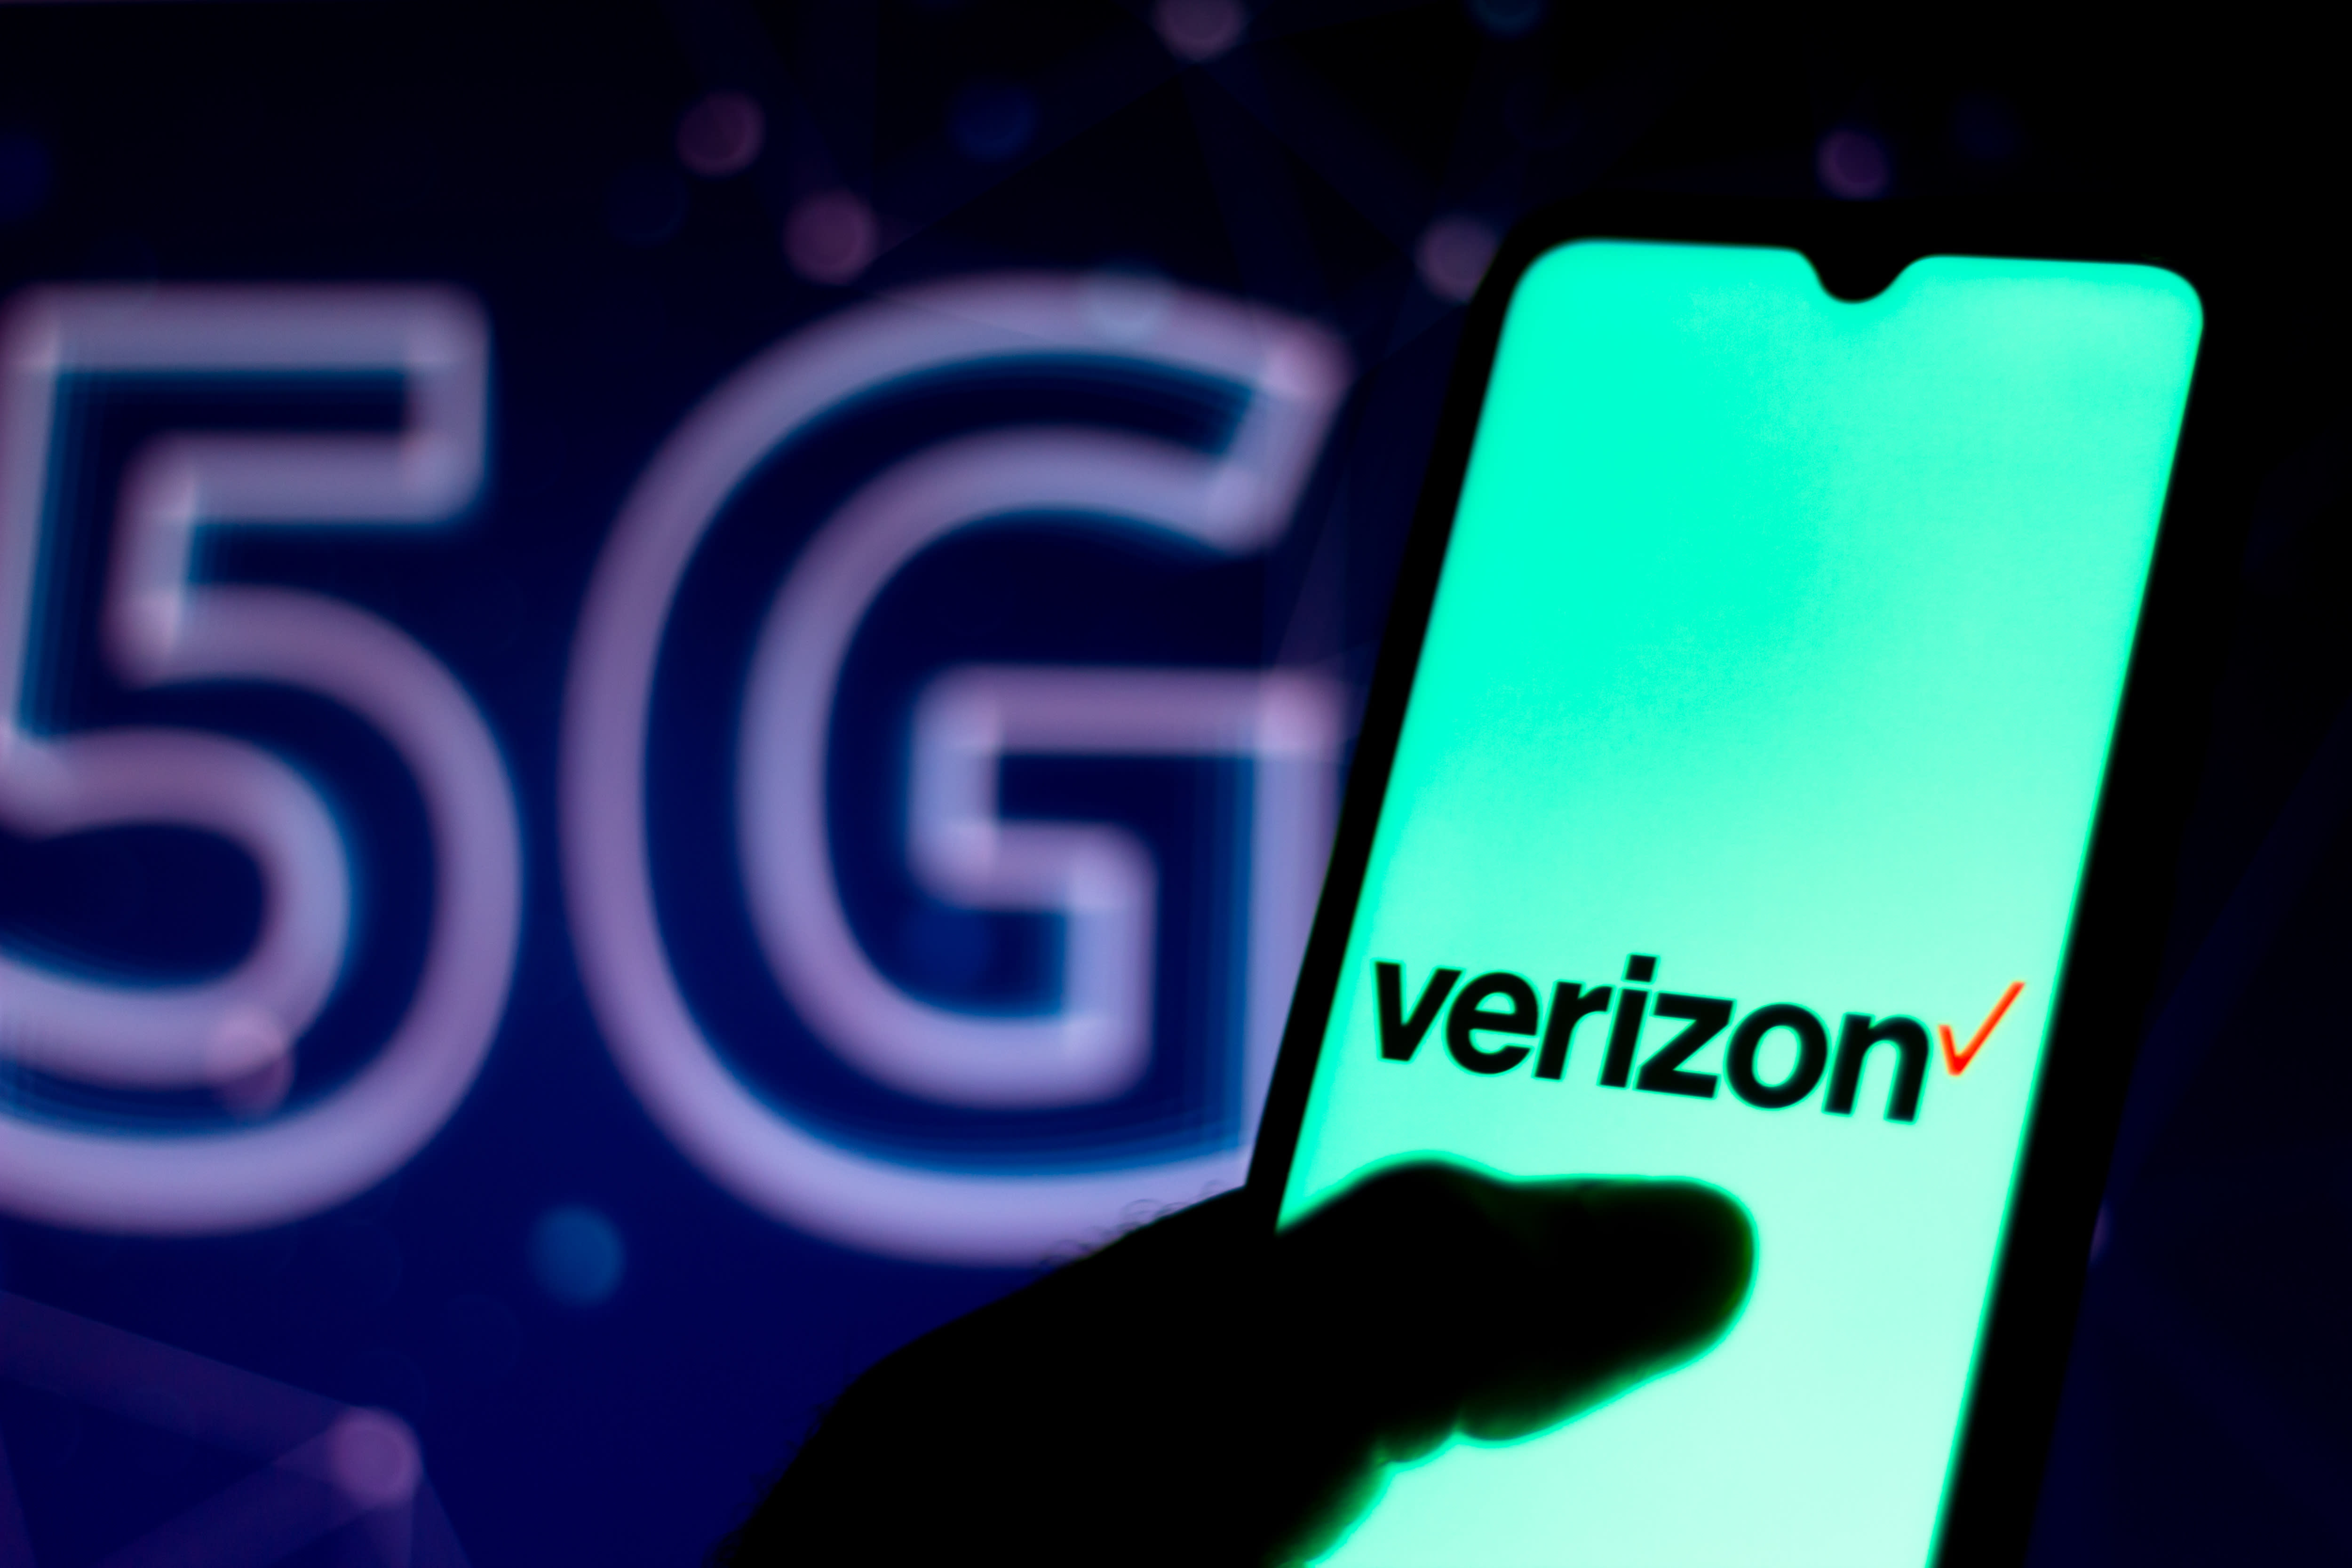 Verizon is the top bidder on 5G spectrum, committing more than $45 billion